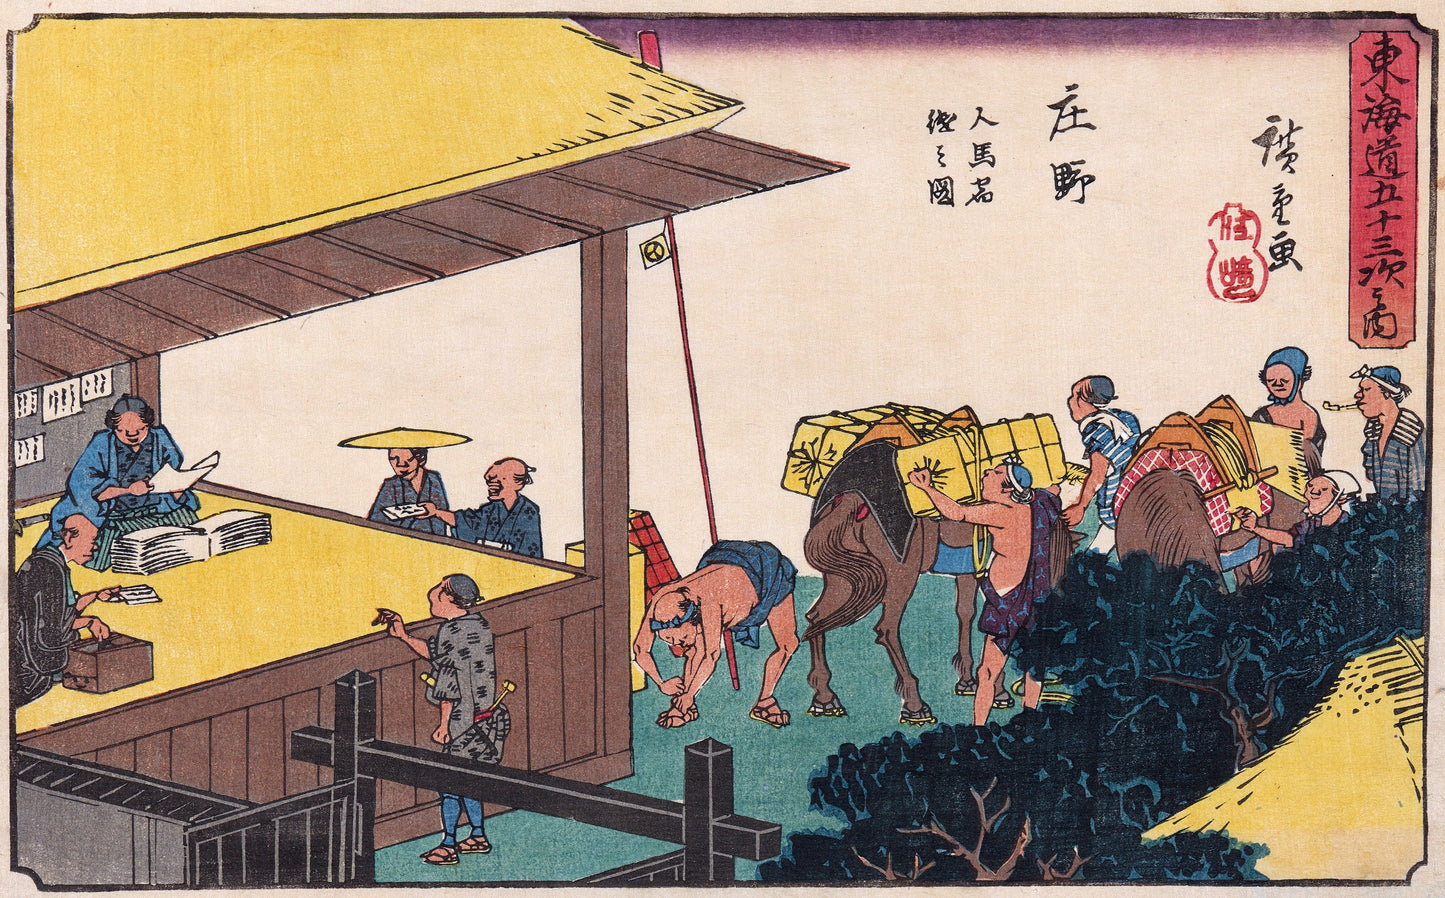 Ando Hiroshige Stations of the Tokaido Set 2 [27 Images]